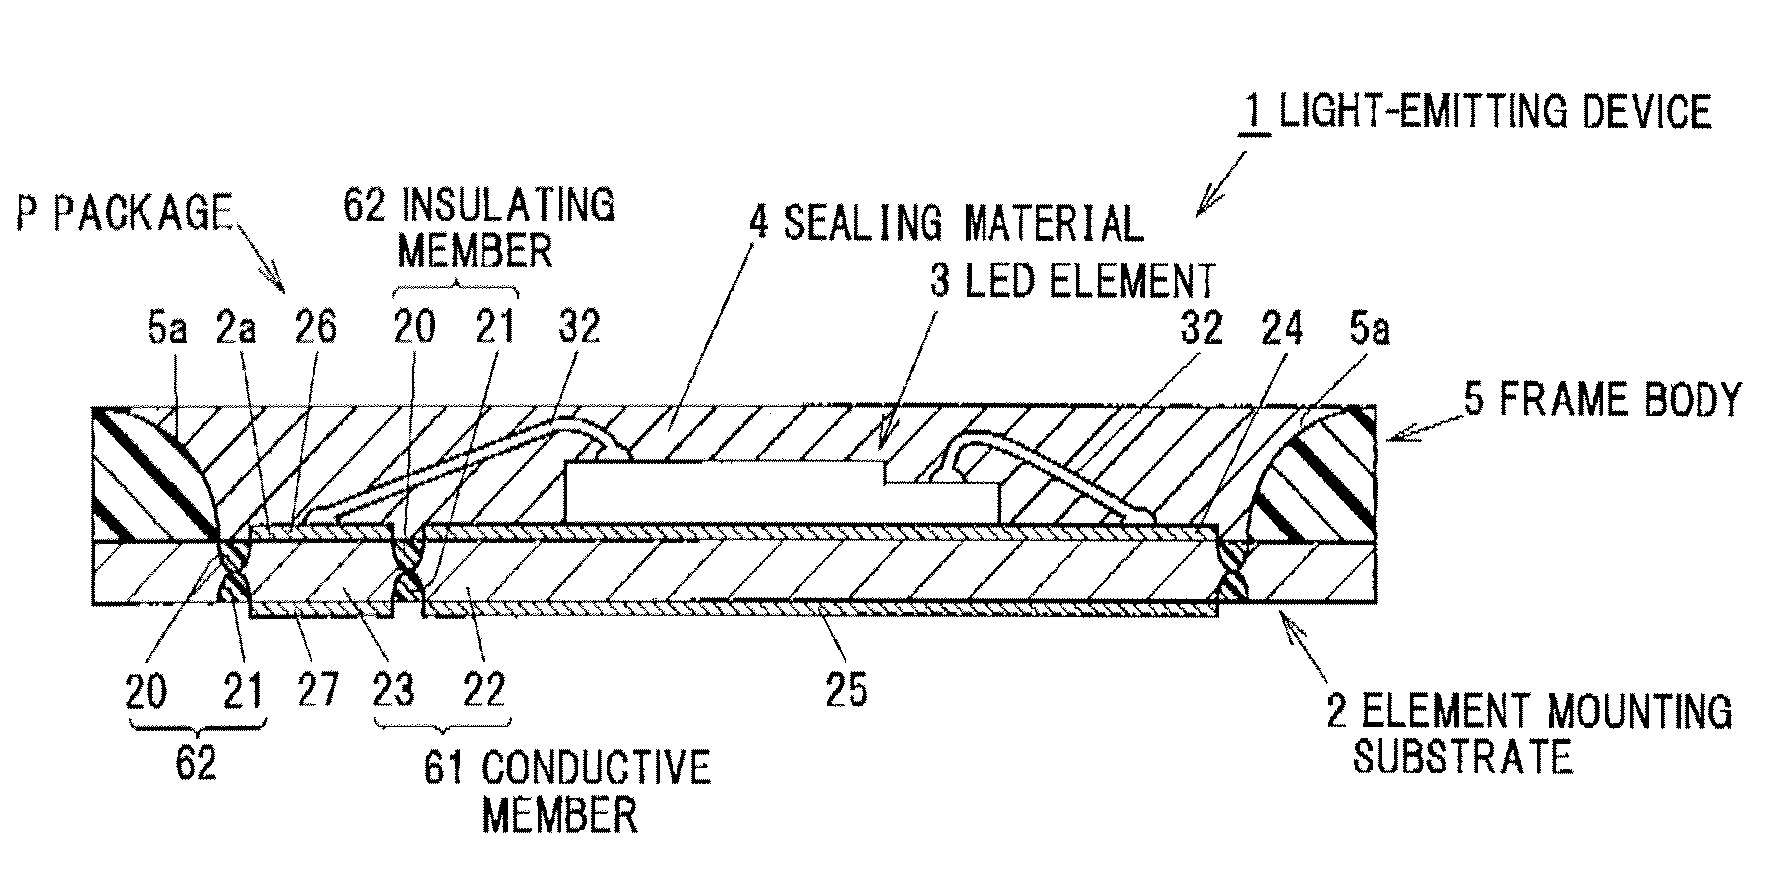 Method of manufacturing light-emitting device